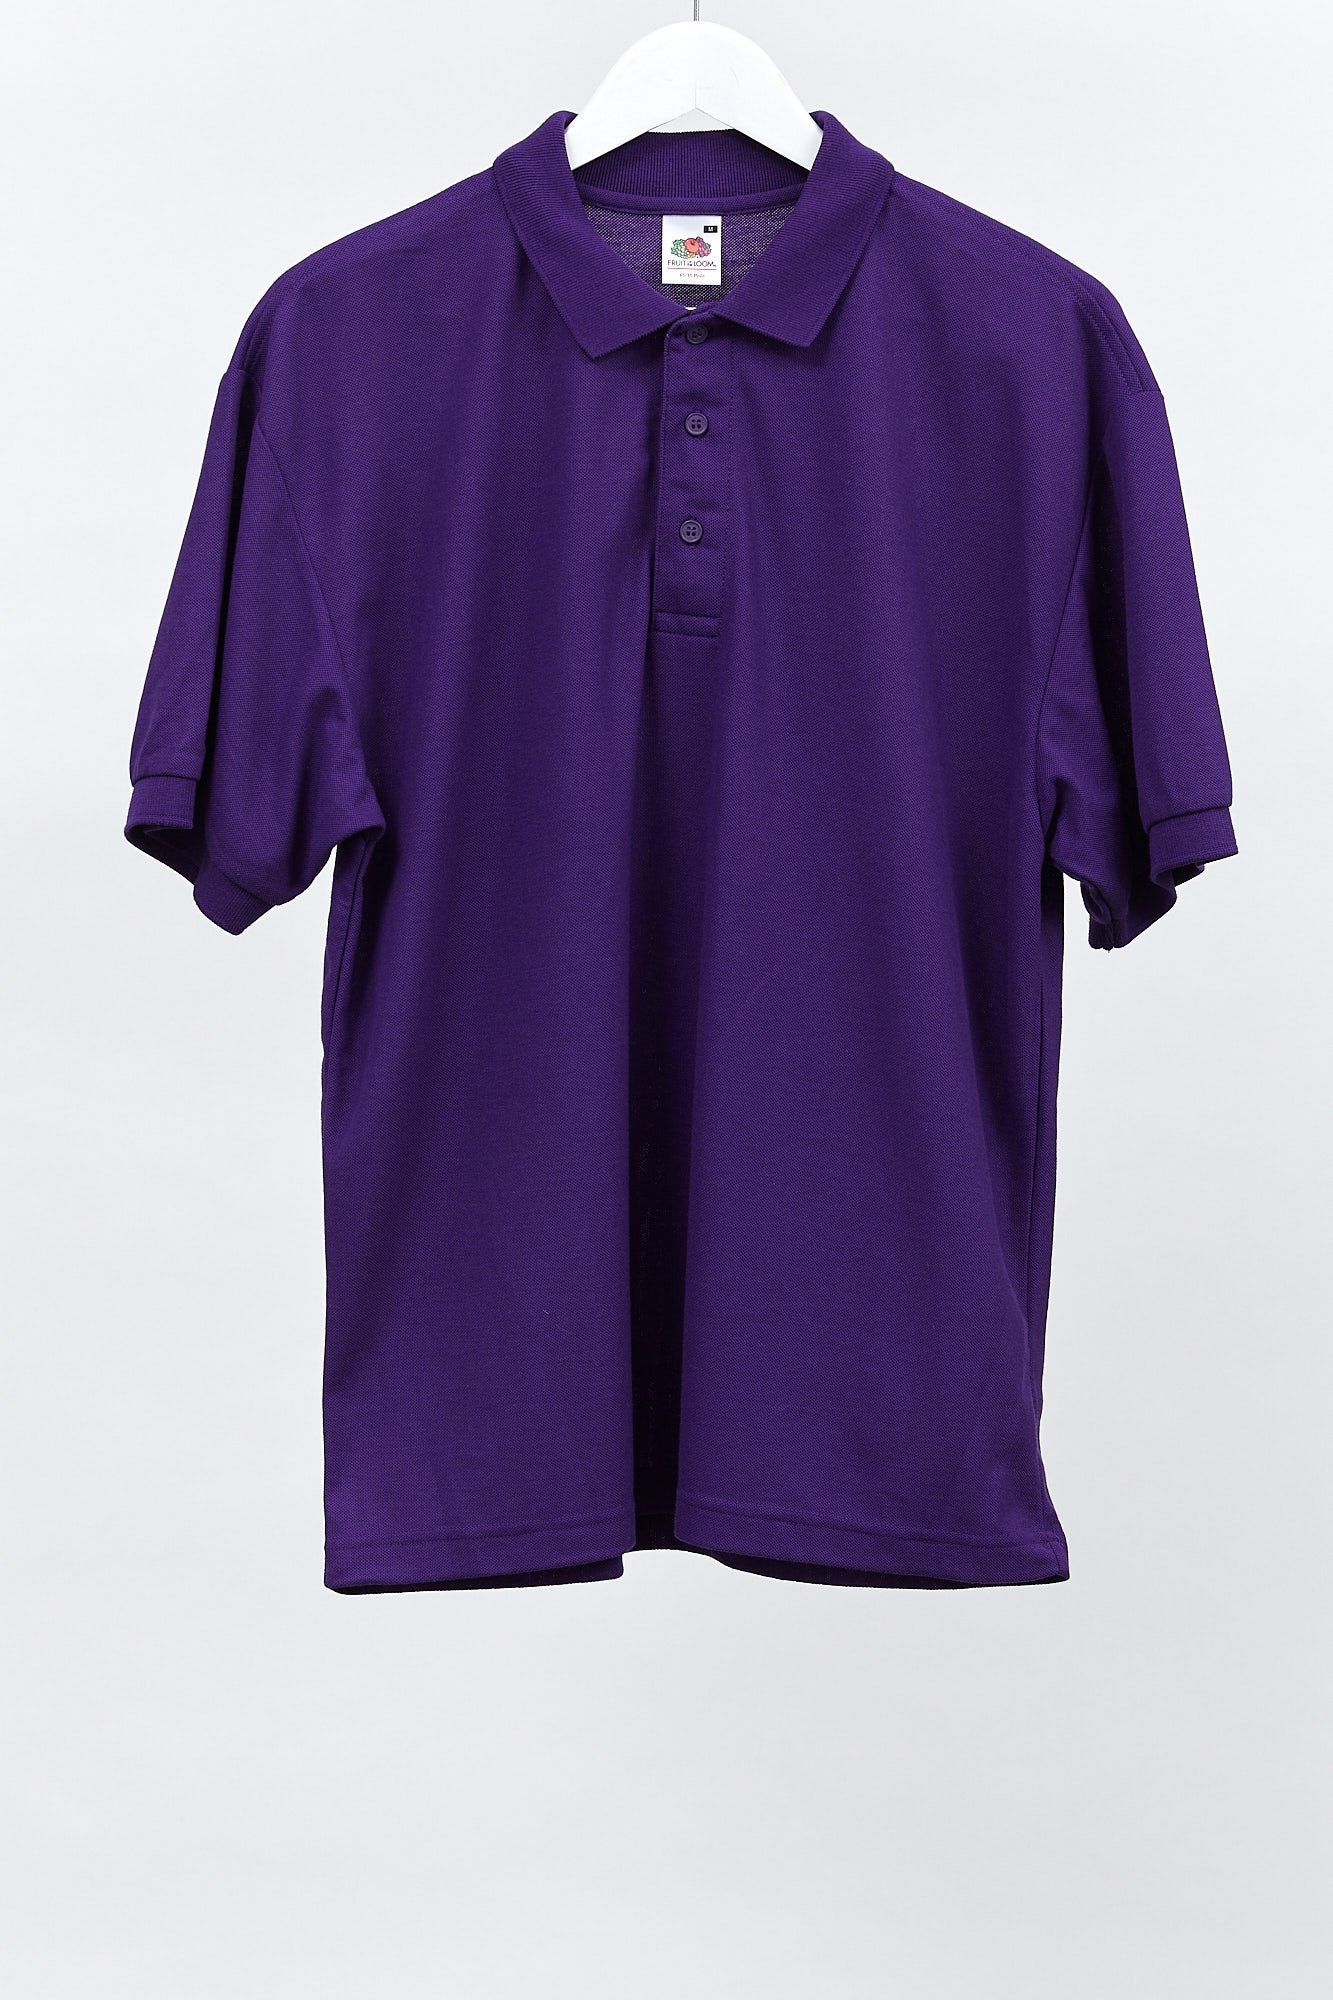 Mens Purple Polo Shirt: Size Medium